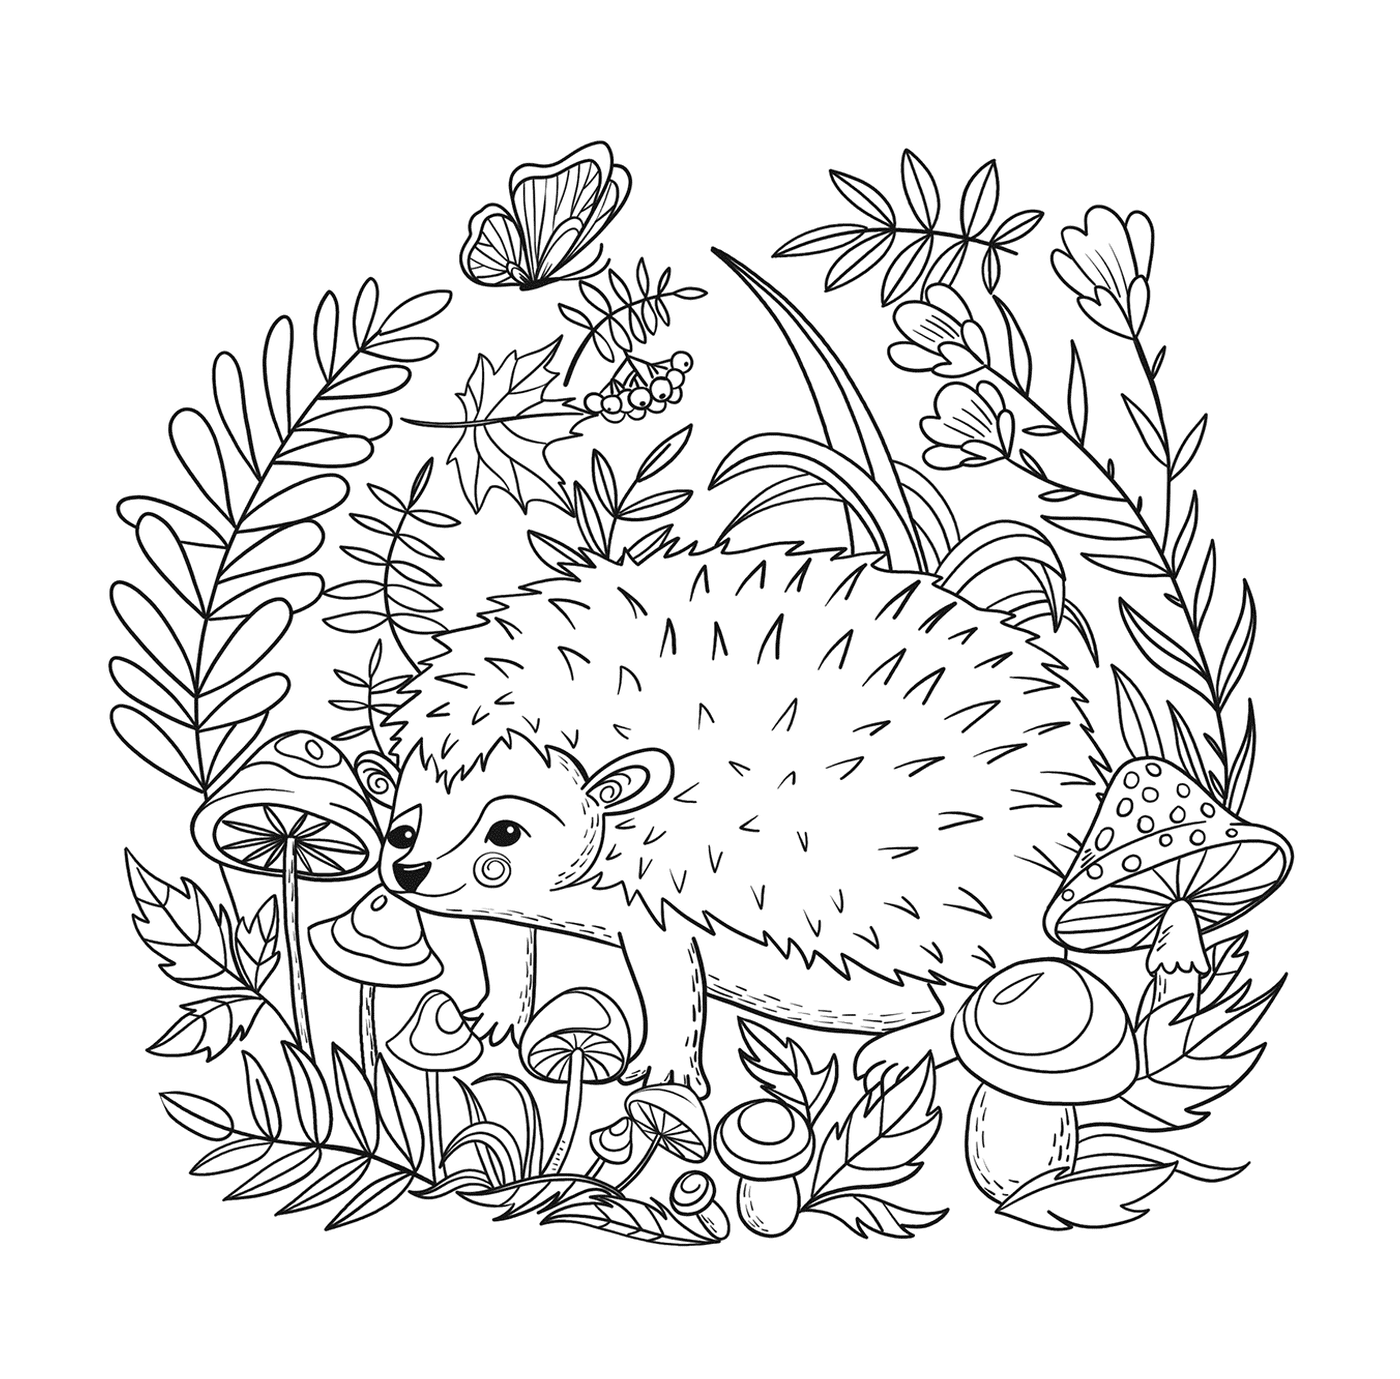  Hedgehog in the savannah by Lesya Adamchuk 